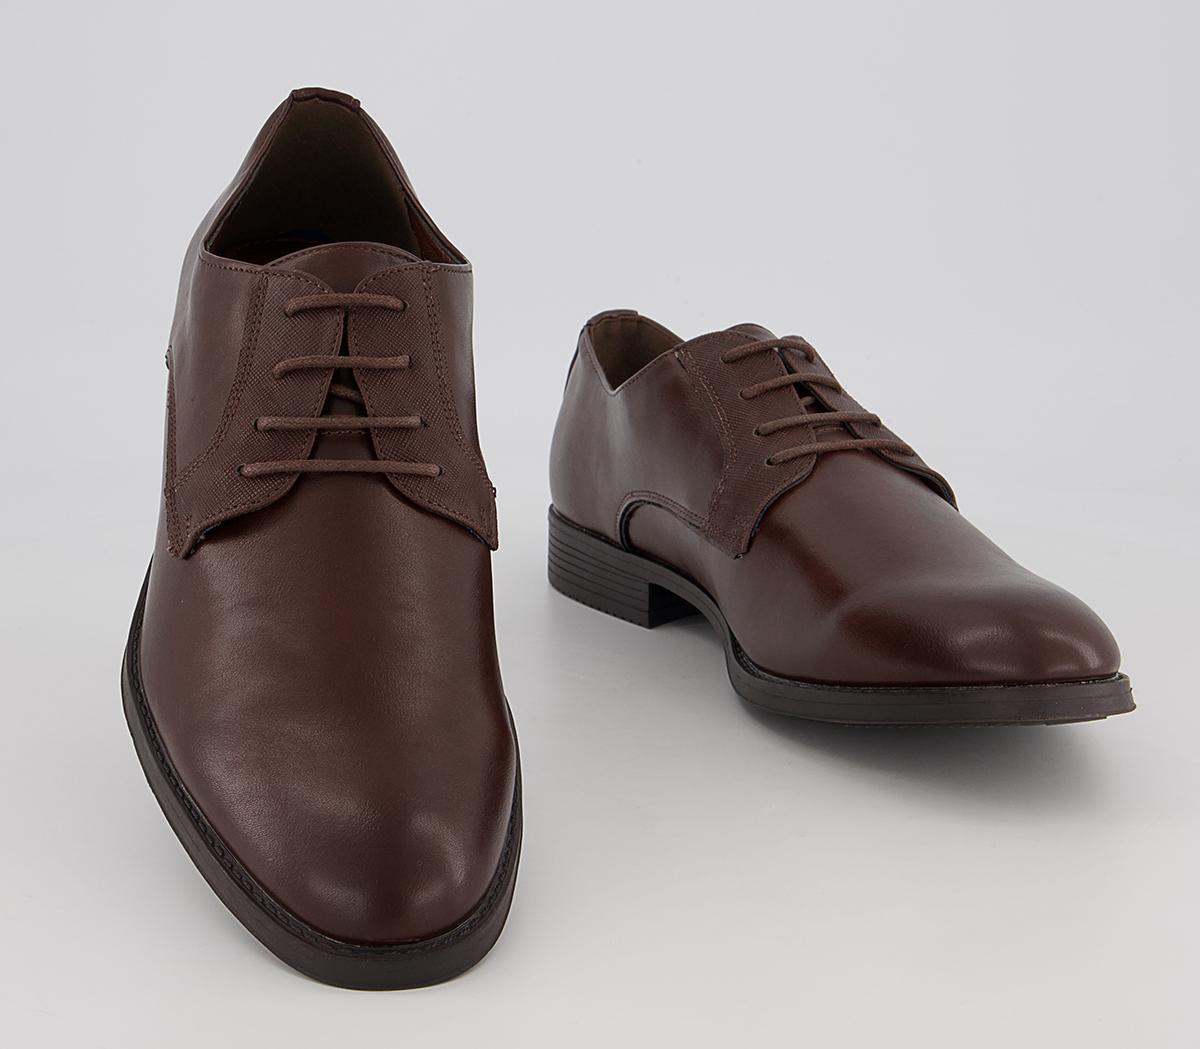 OFFICE Maldon Round Toe Derby Shoes Brown - Men’s Smart Shoes